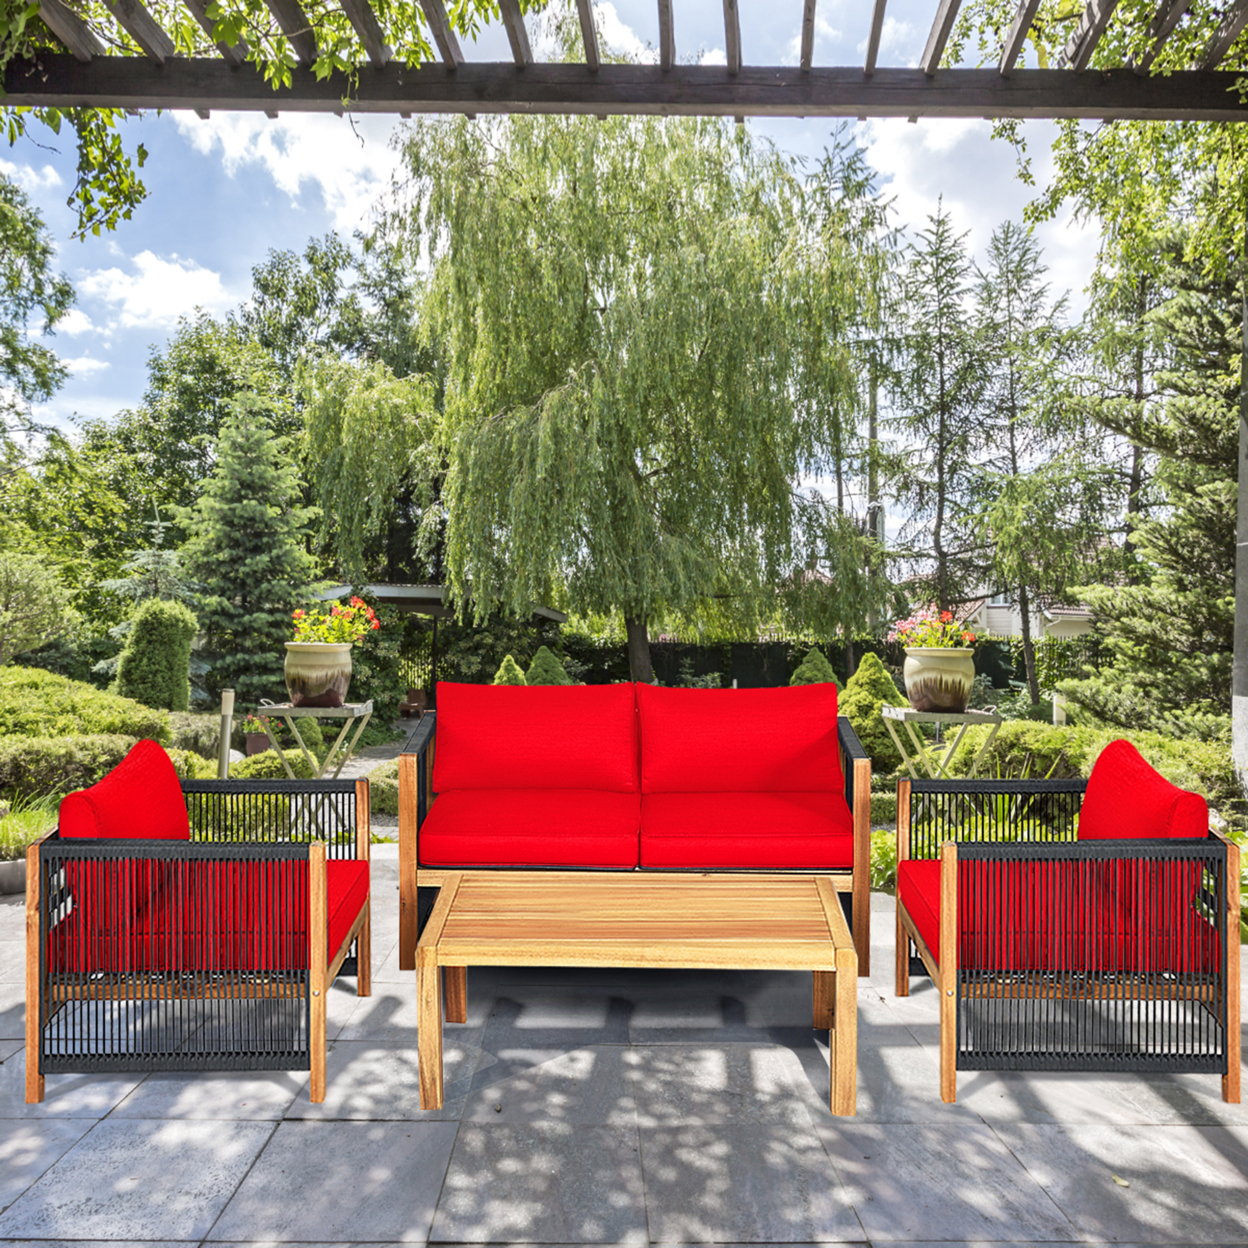 4PCS Acacia Wood Outdoor Patio Furniture Conversation Set W/ Red Cushions